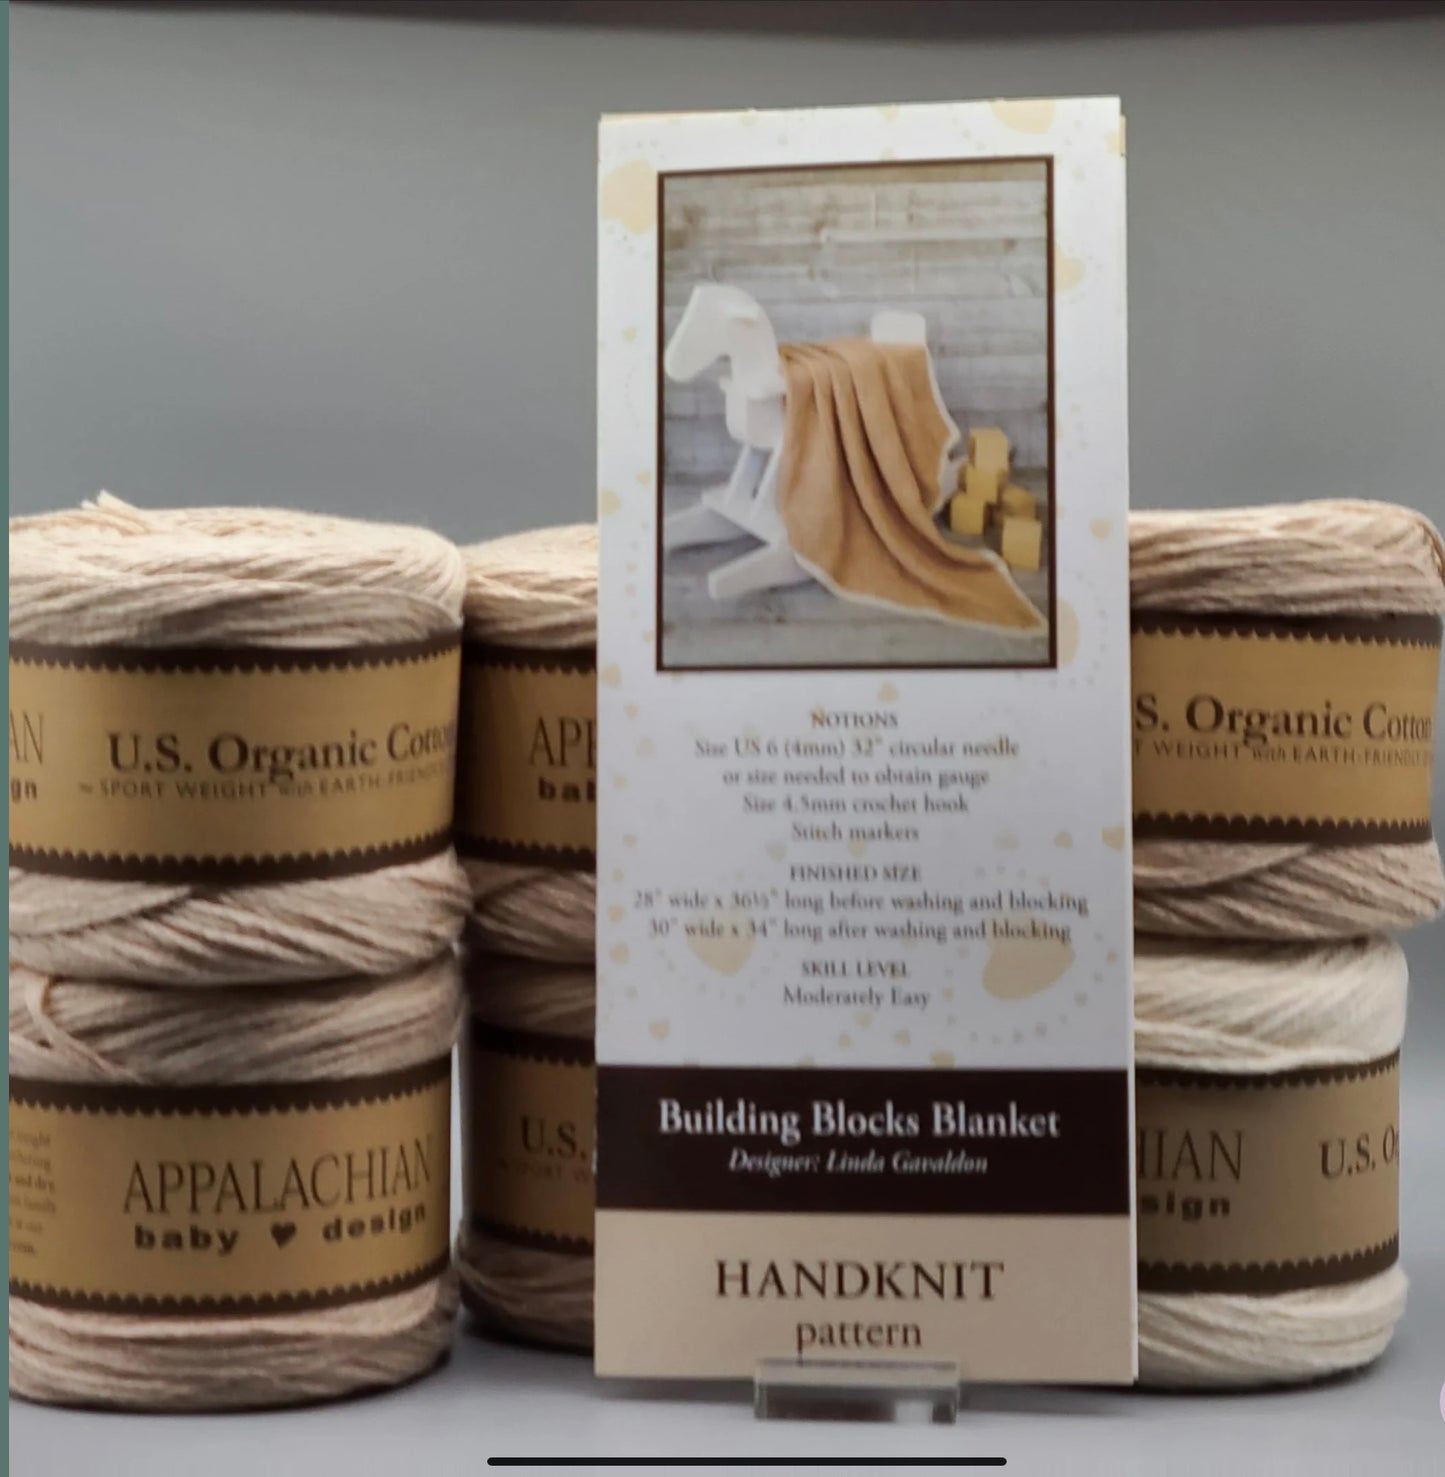 Appalachian Baby yarn; building blocks blanket kit